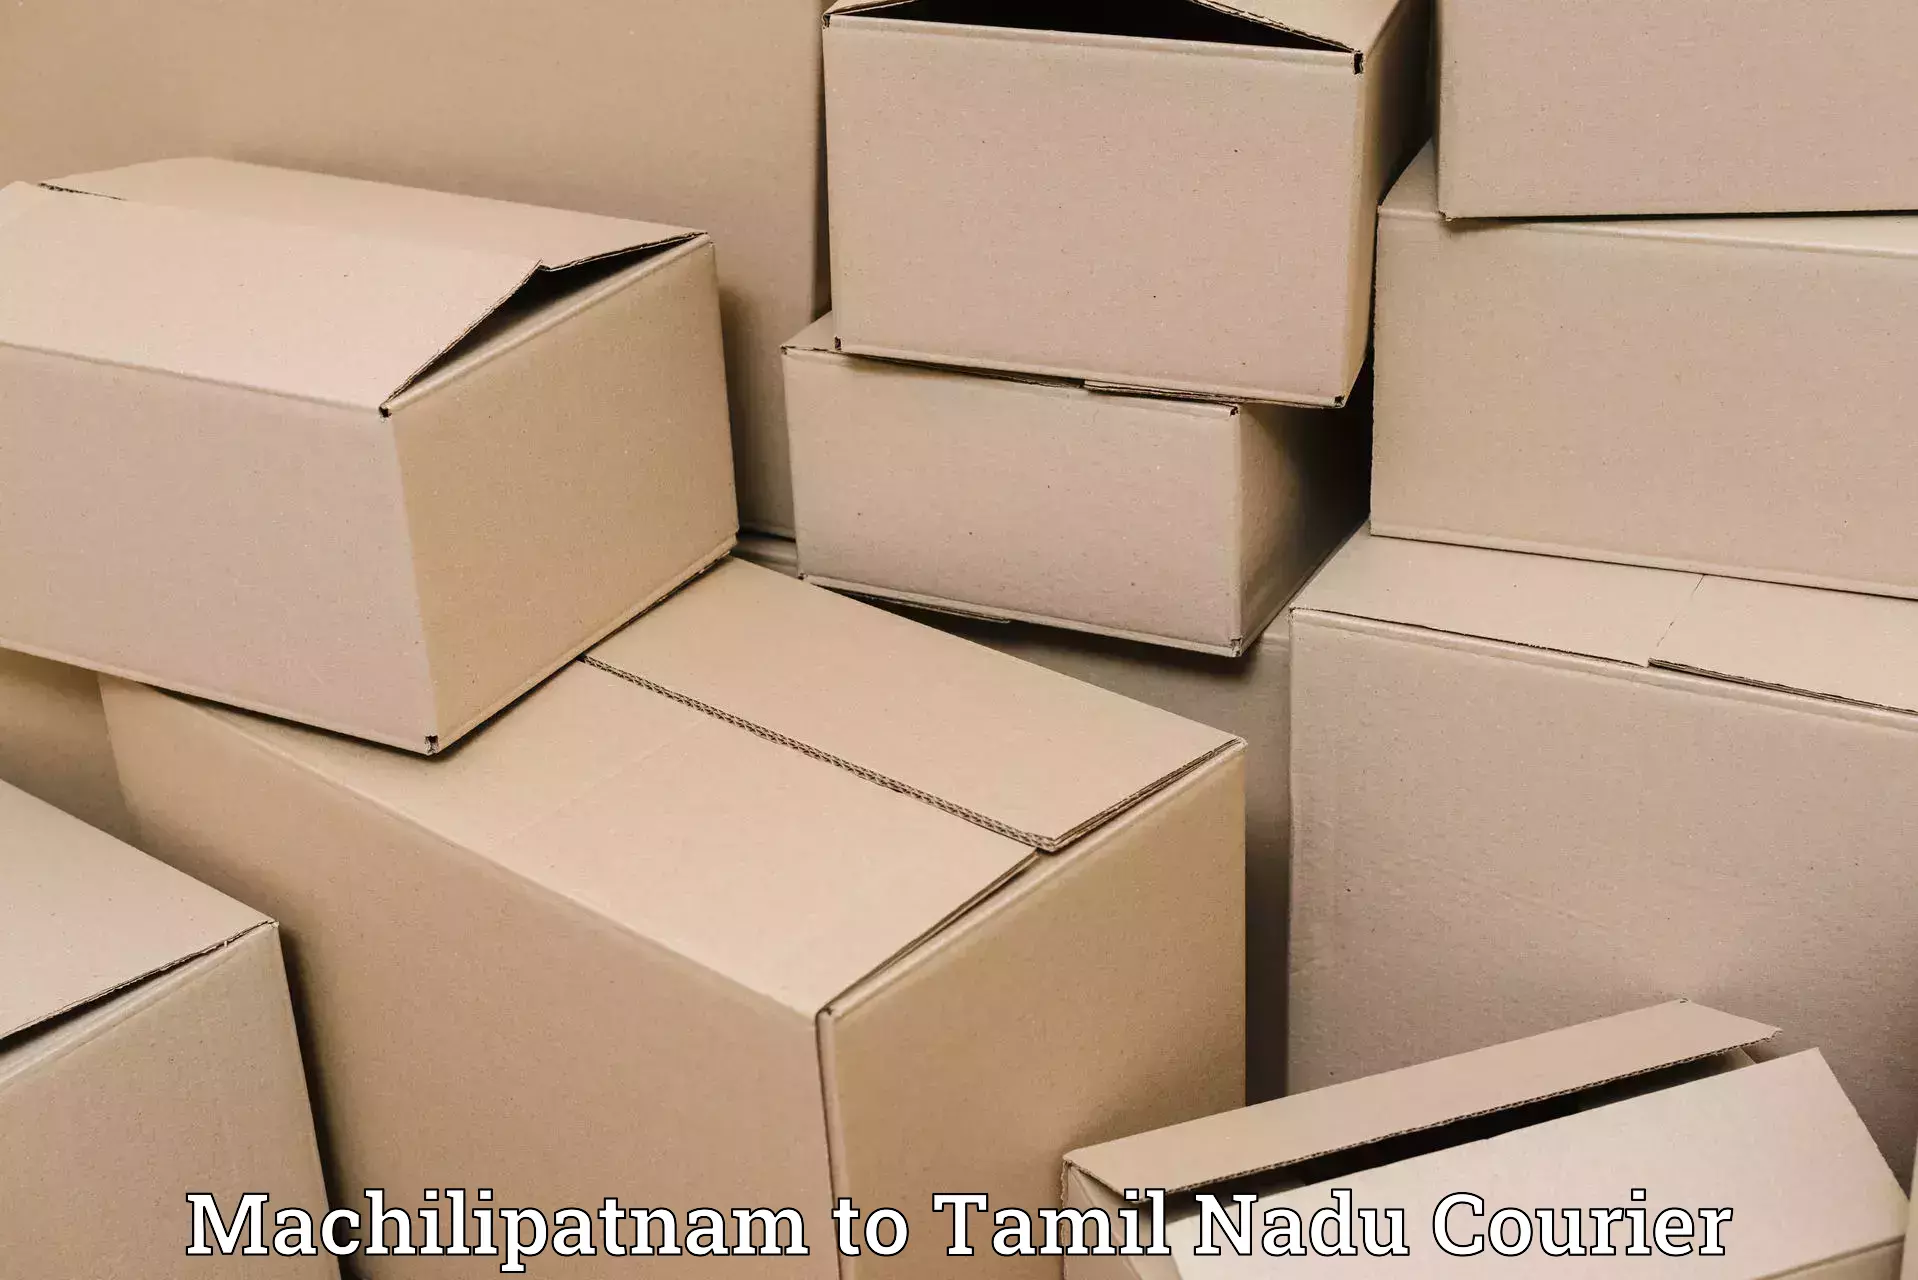 Courier service comparison Machilipatnam to Anna University Chennai